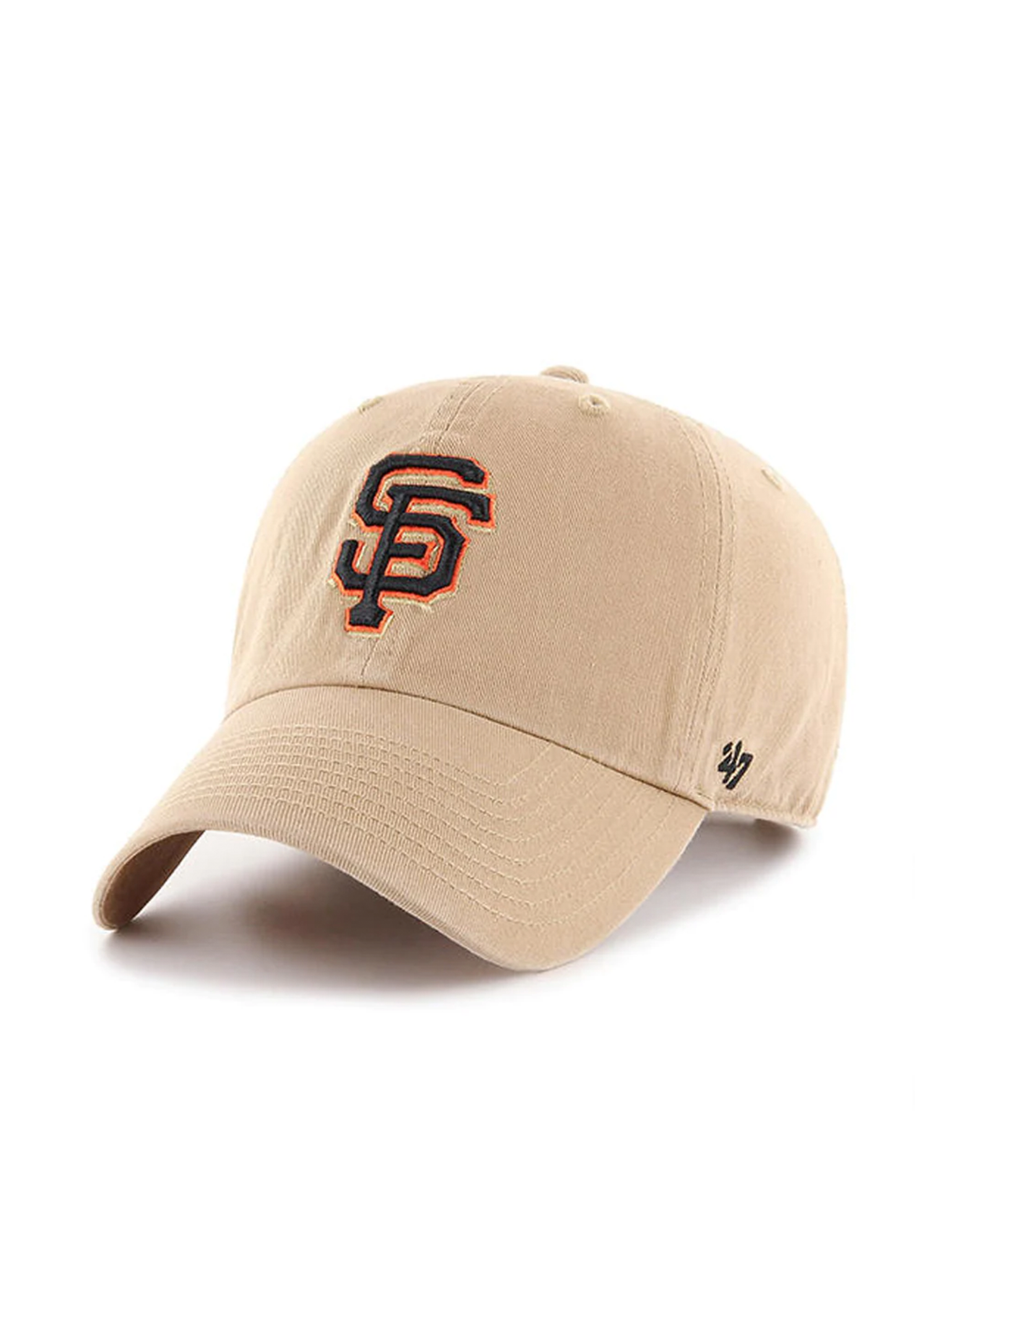 SF Giants Basic Ball Cap, Khaki/Black/Orange